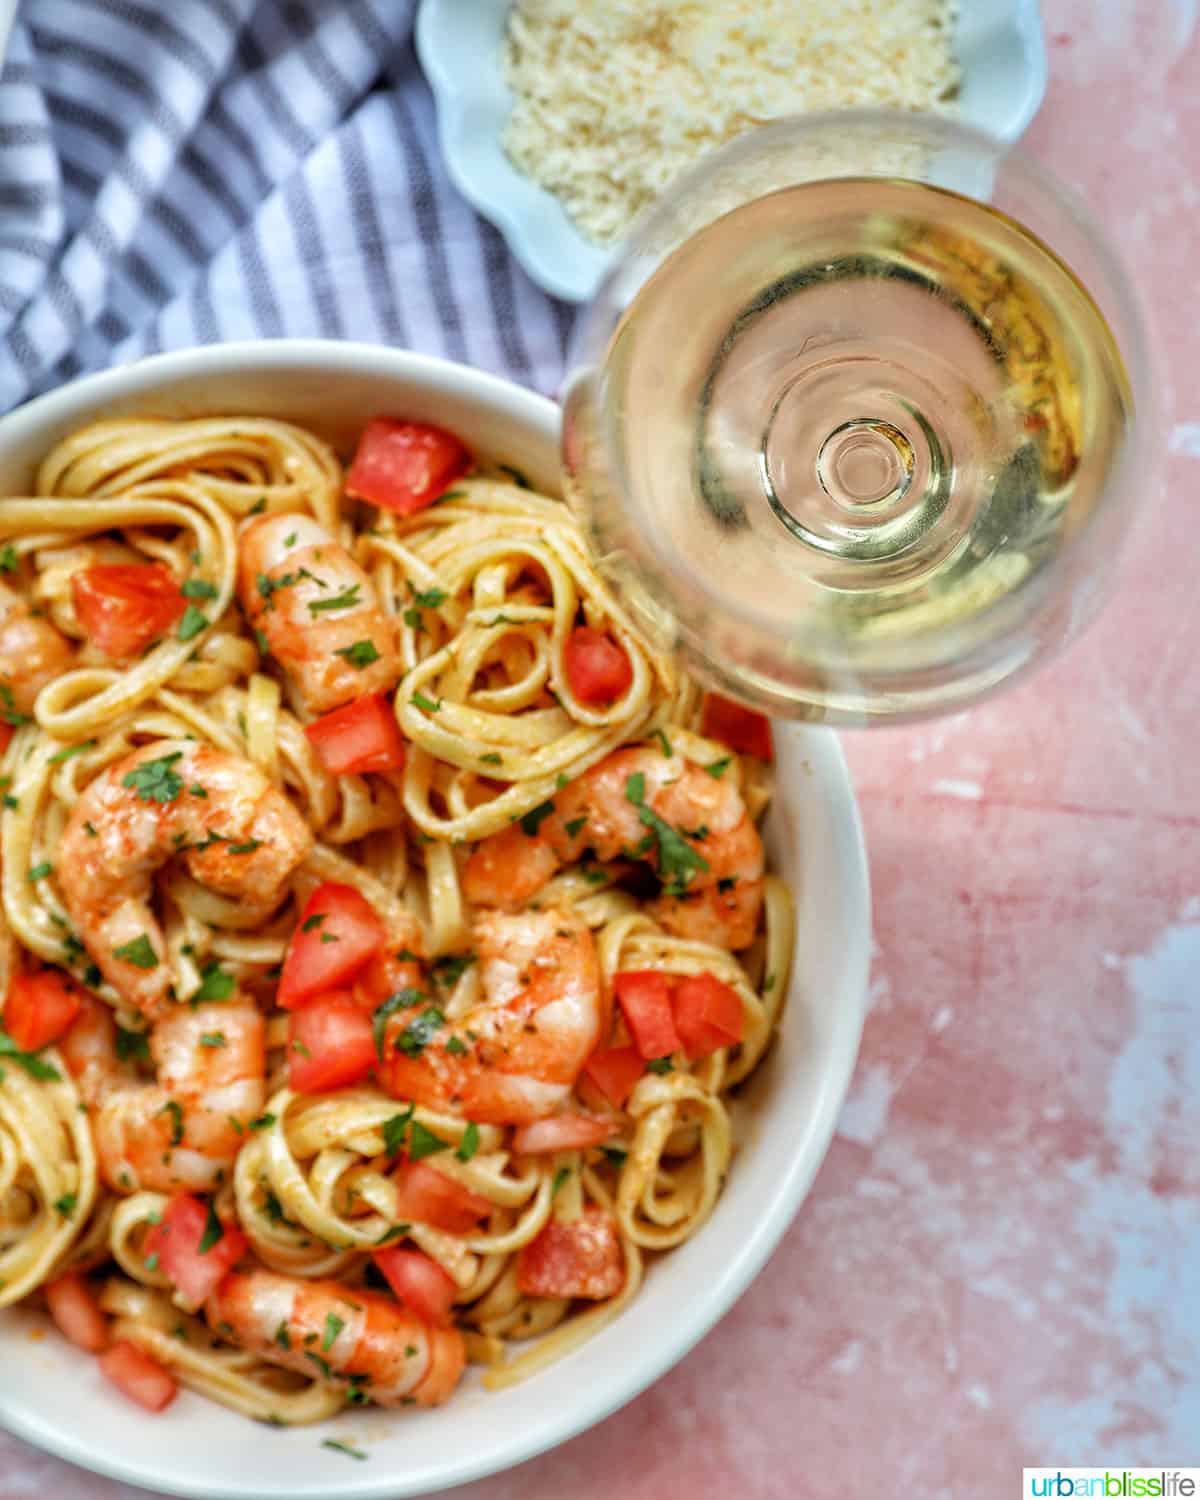 Cajun Shrimp Pasta with glass of white wine